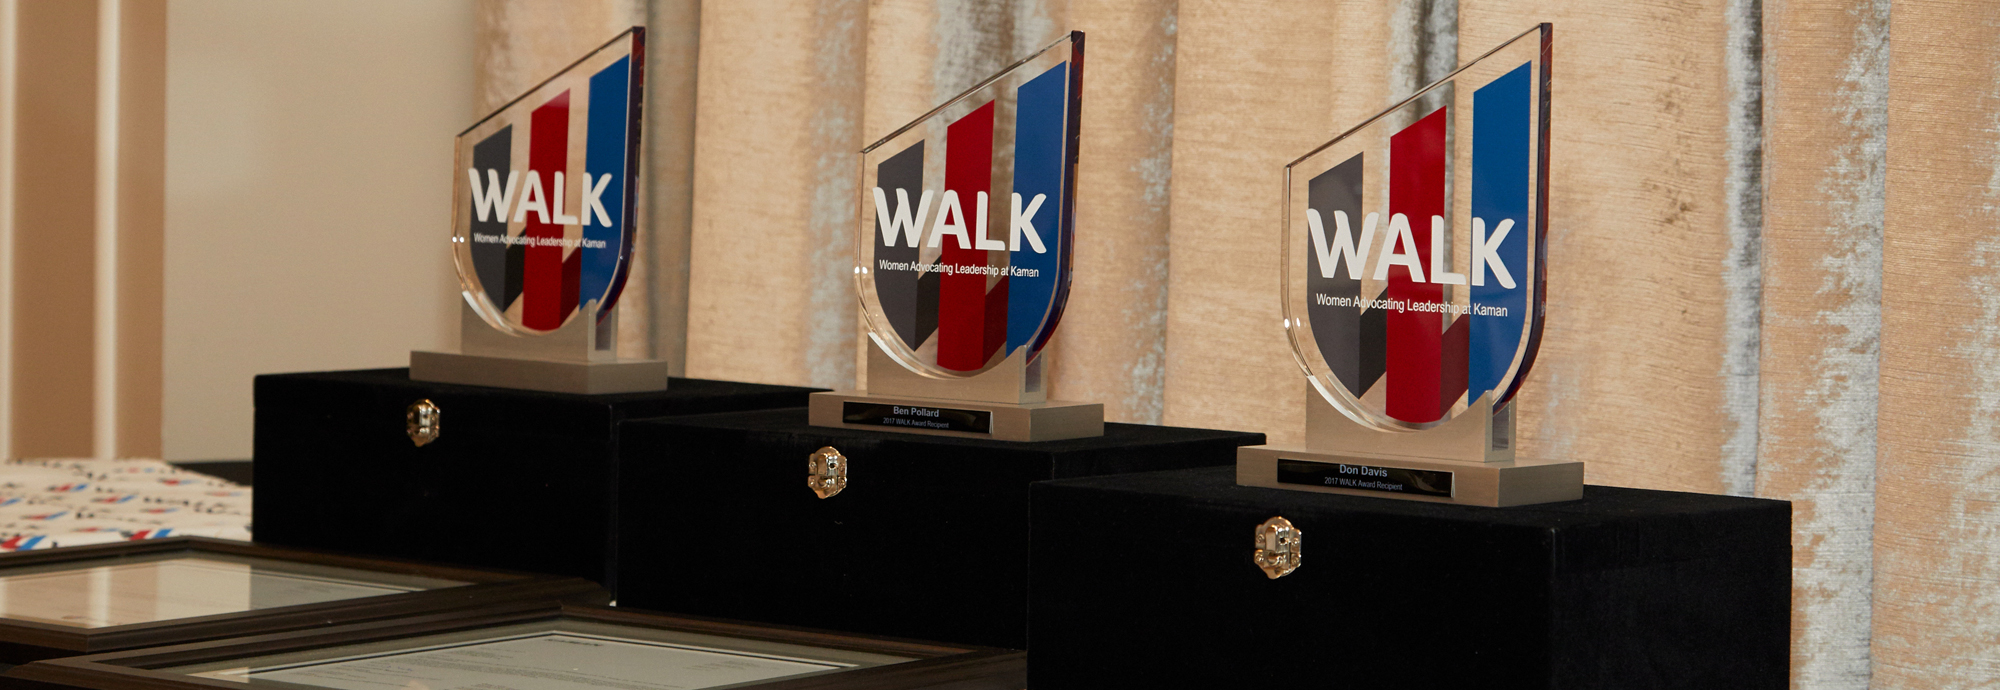 walk awards